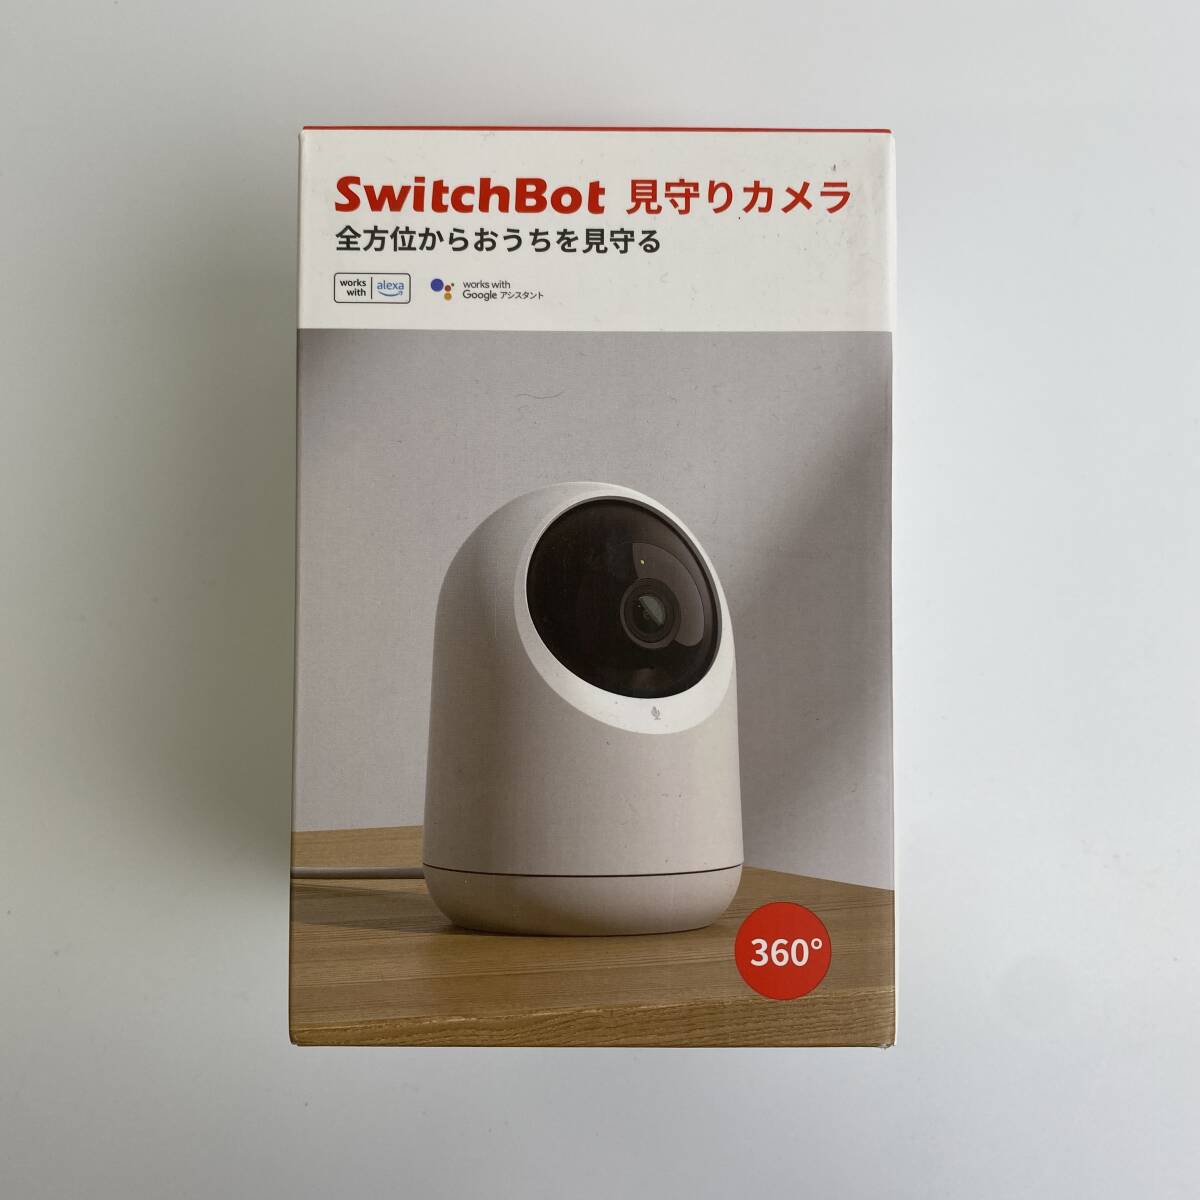 [1 jpy auction ] switch boto(SwitchBot) security camera Alexa indoor camera network camera baby monitor TS01B001239